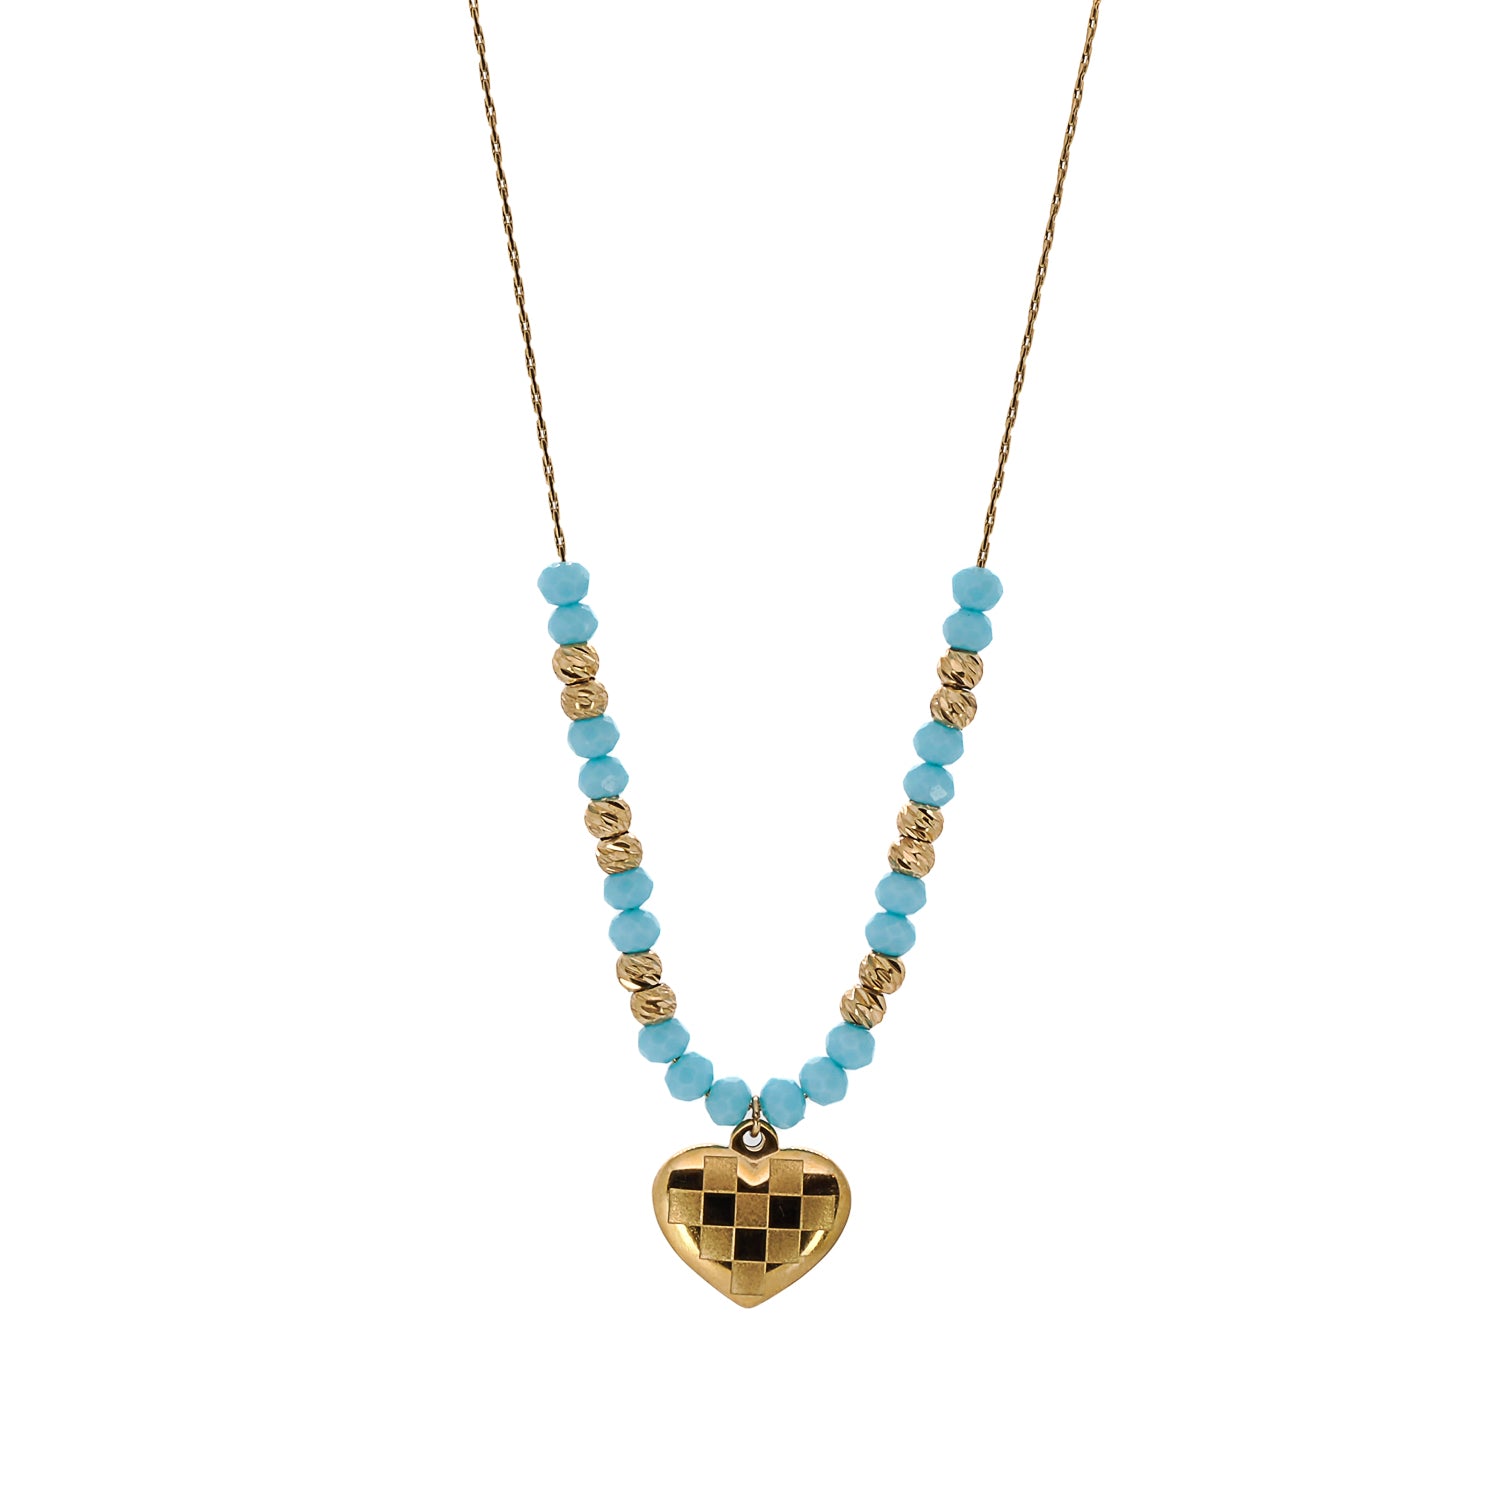 Artisanal Craftsmanship - Stainless Steel Gold Heart Necklace.